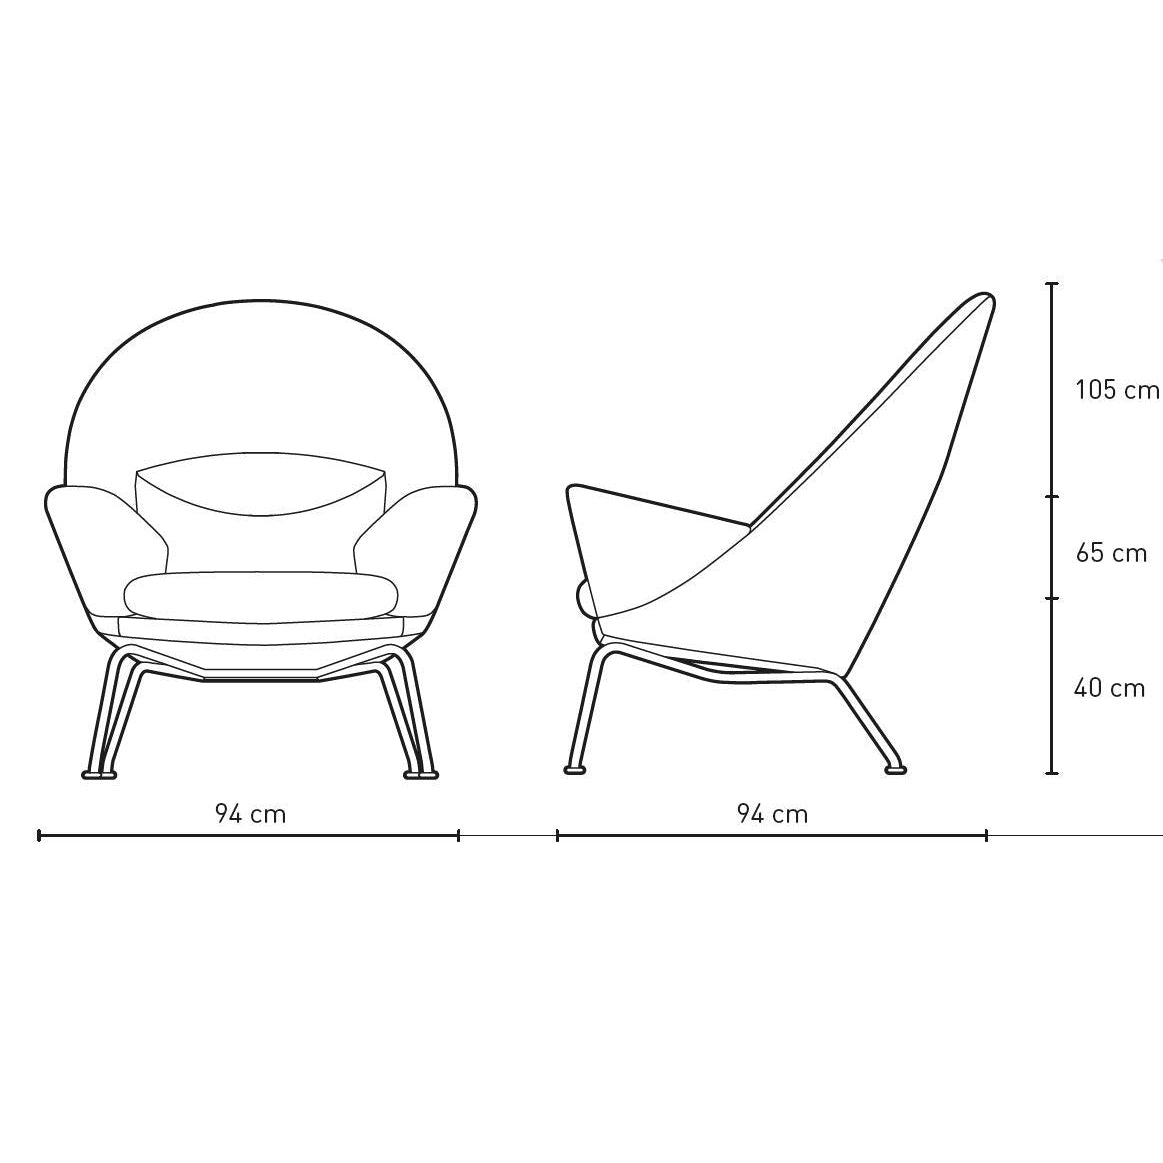 Carl Hansen Ch468 Oculus Chair, Steel/Black Leather